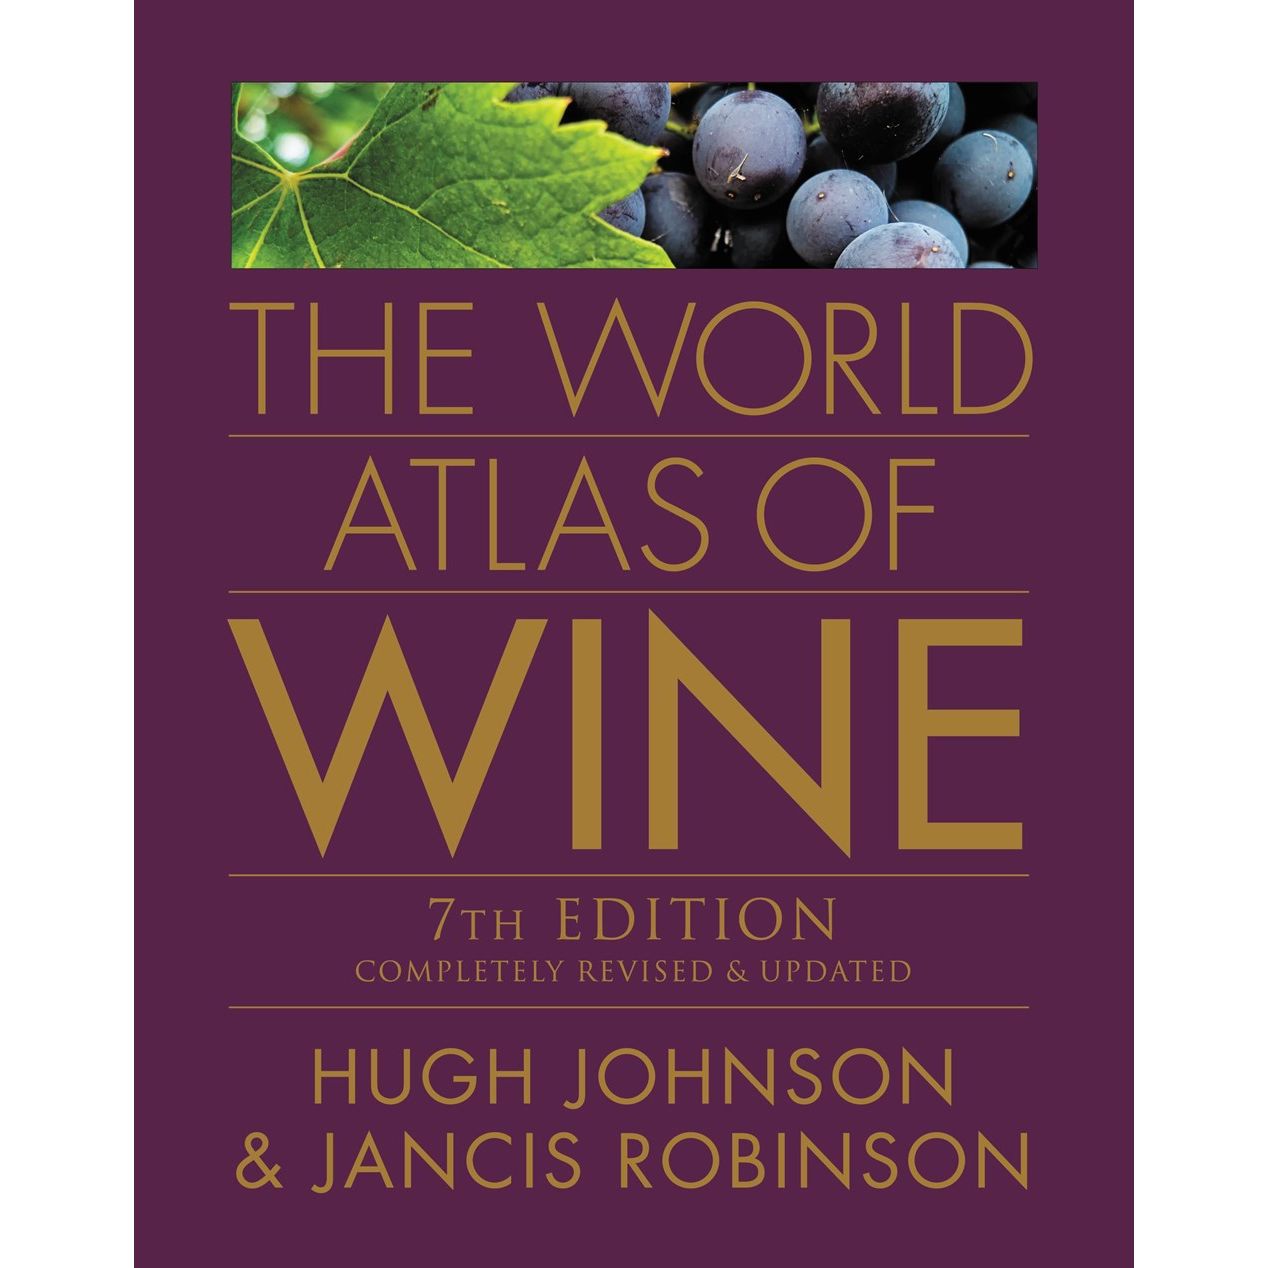 The World Atlas of Wine (Hugh Johnson & Jancis Robinson)